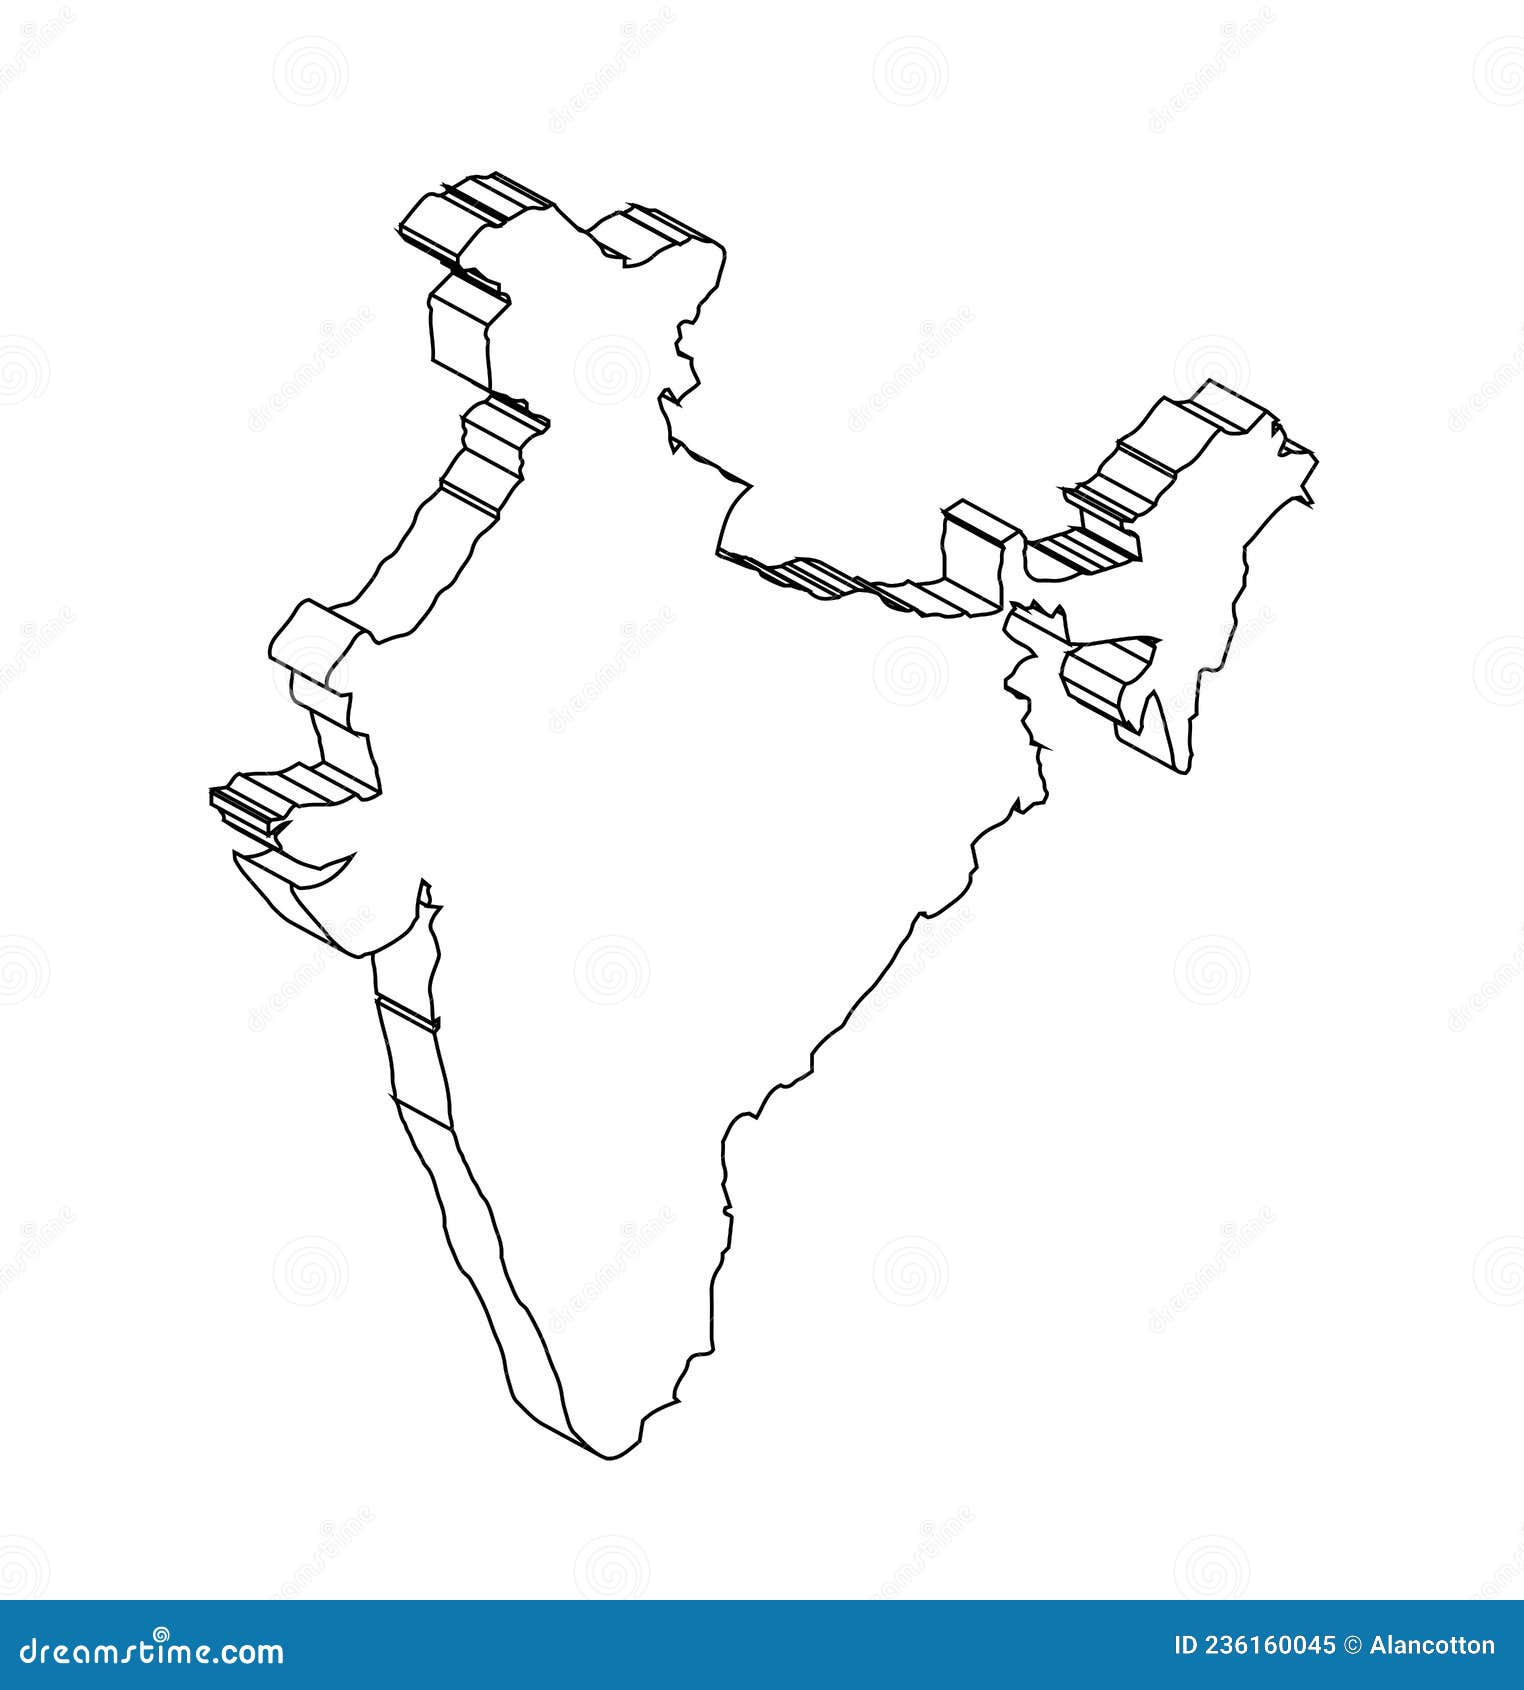 Indian Map drawing free image download-saigonsouth.com.vn